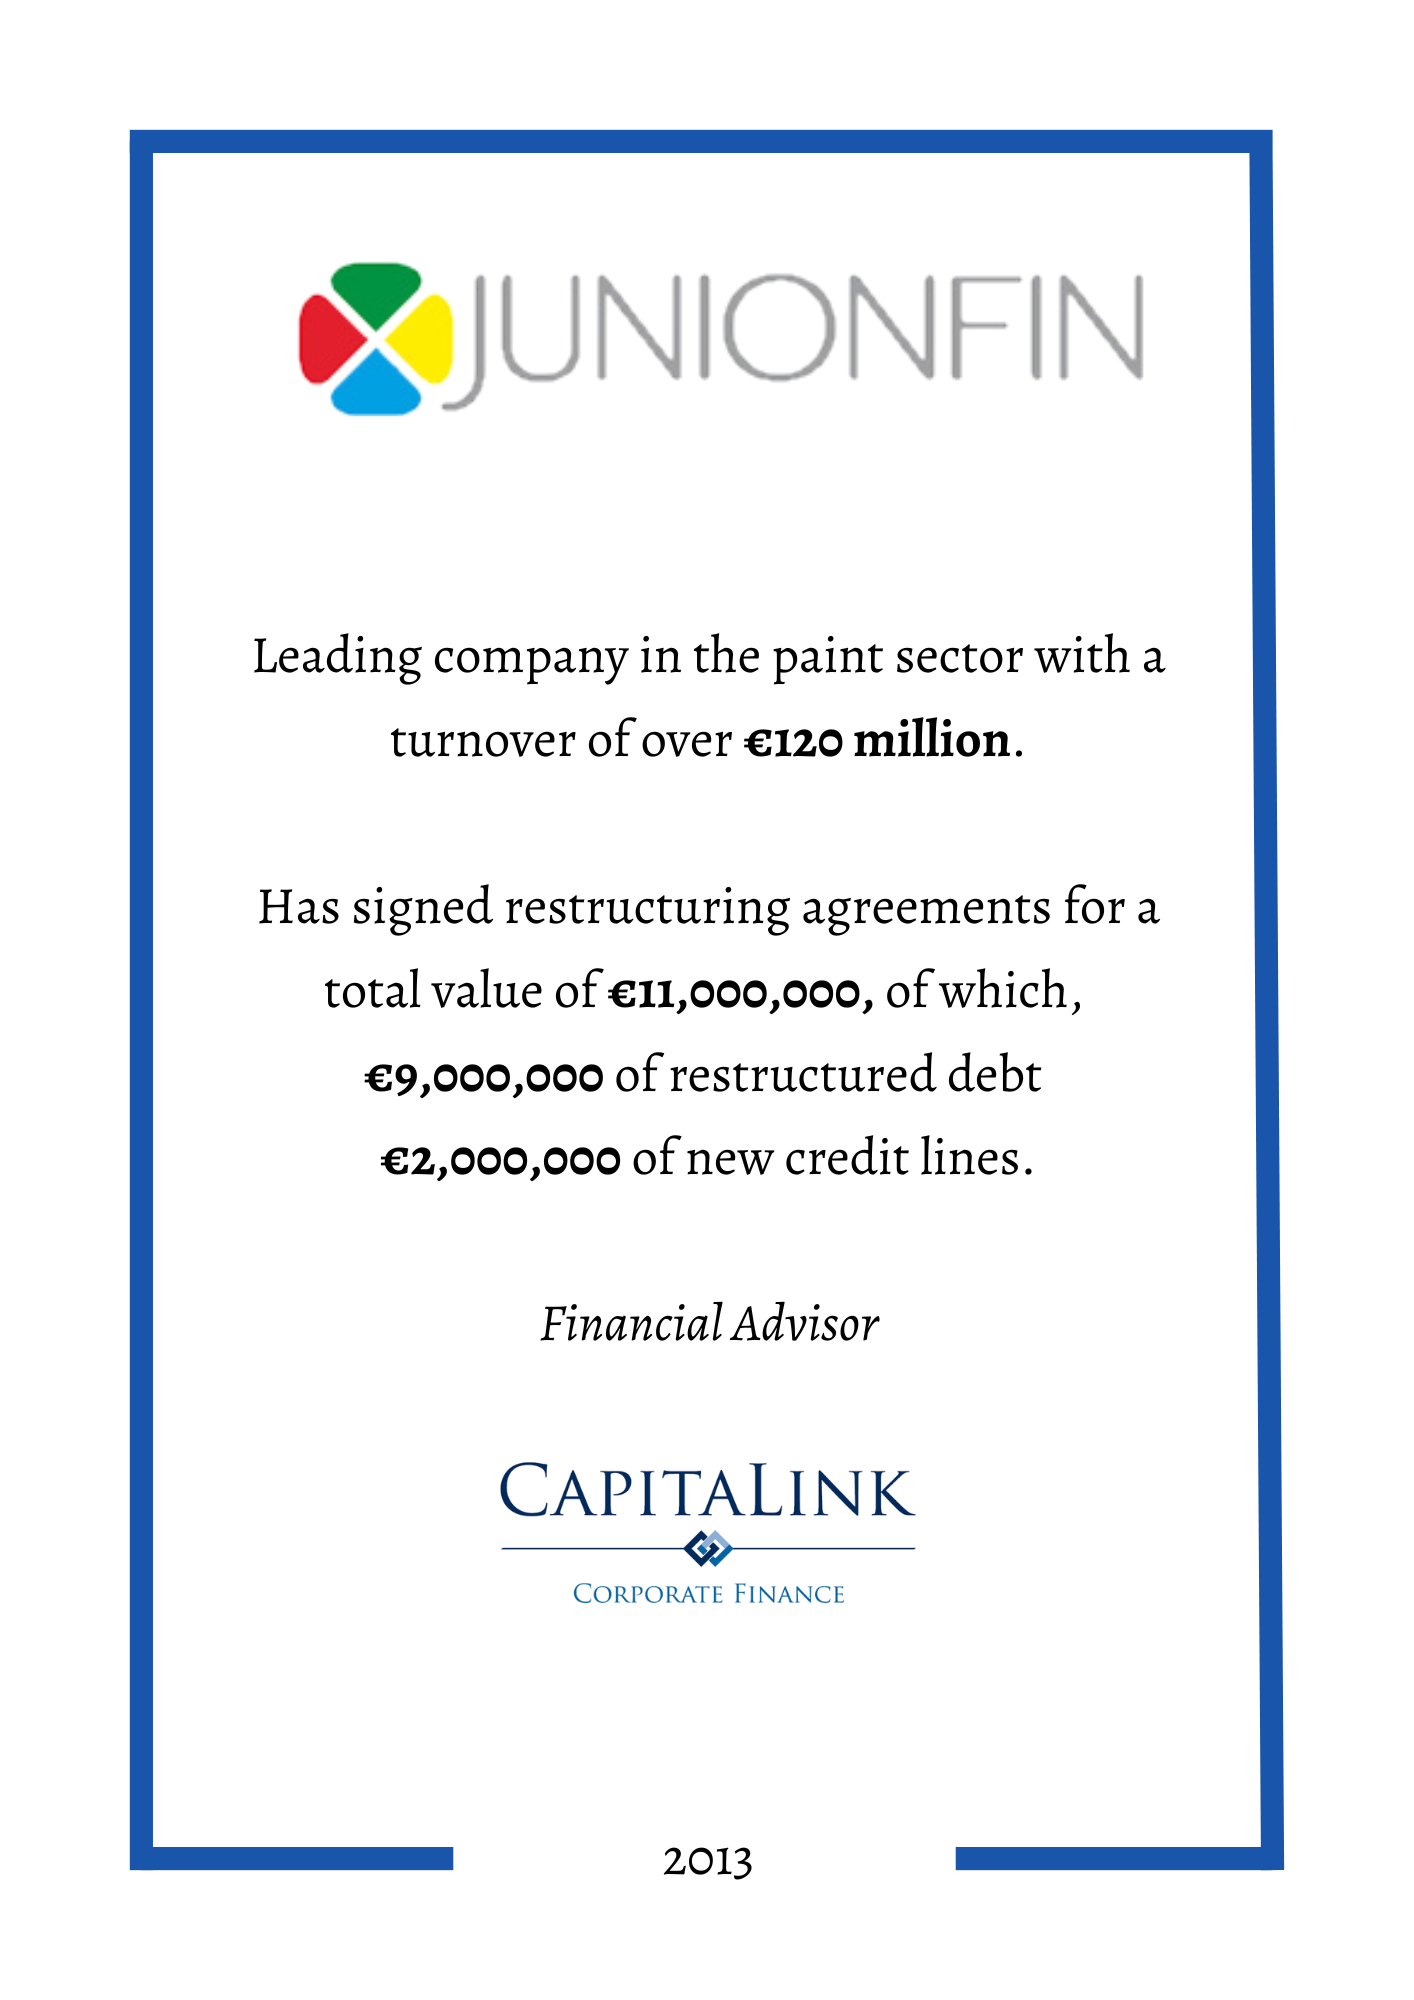 Junionfin debt restructuring